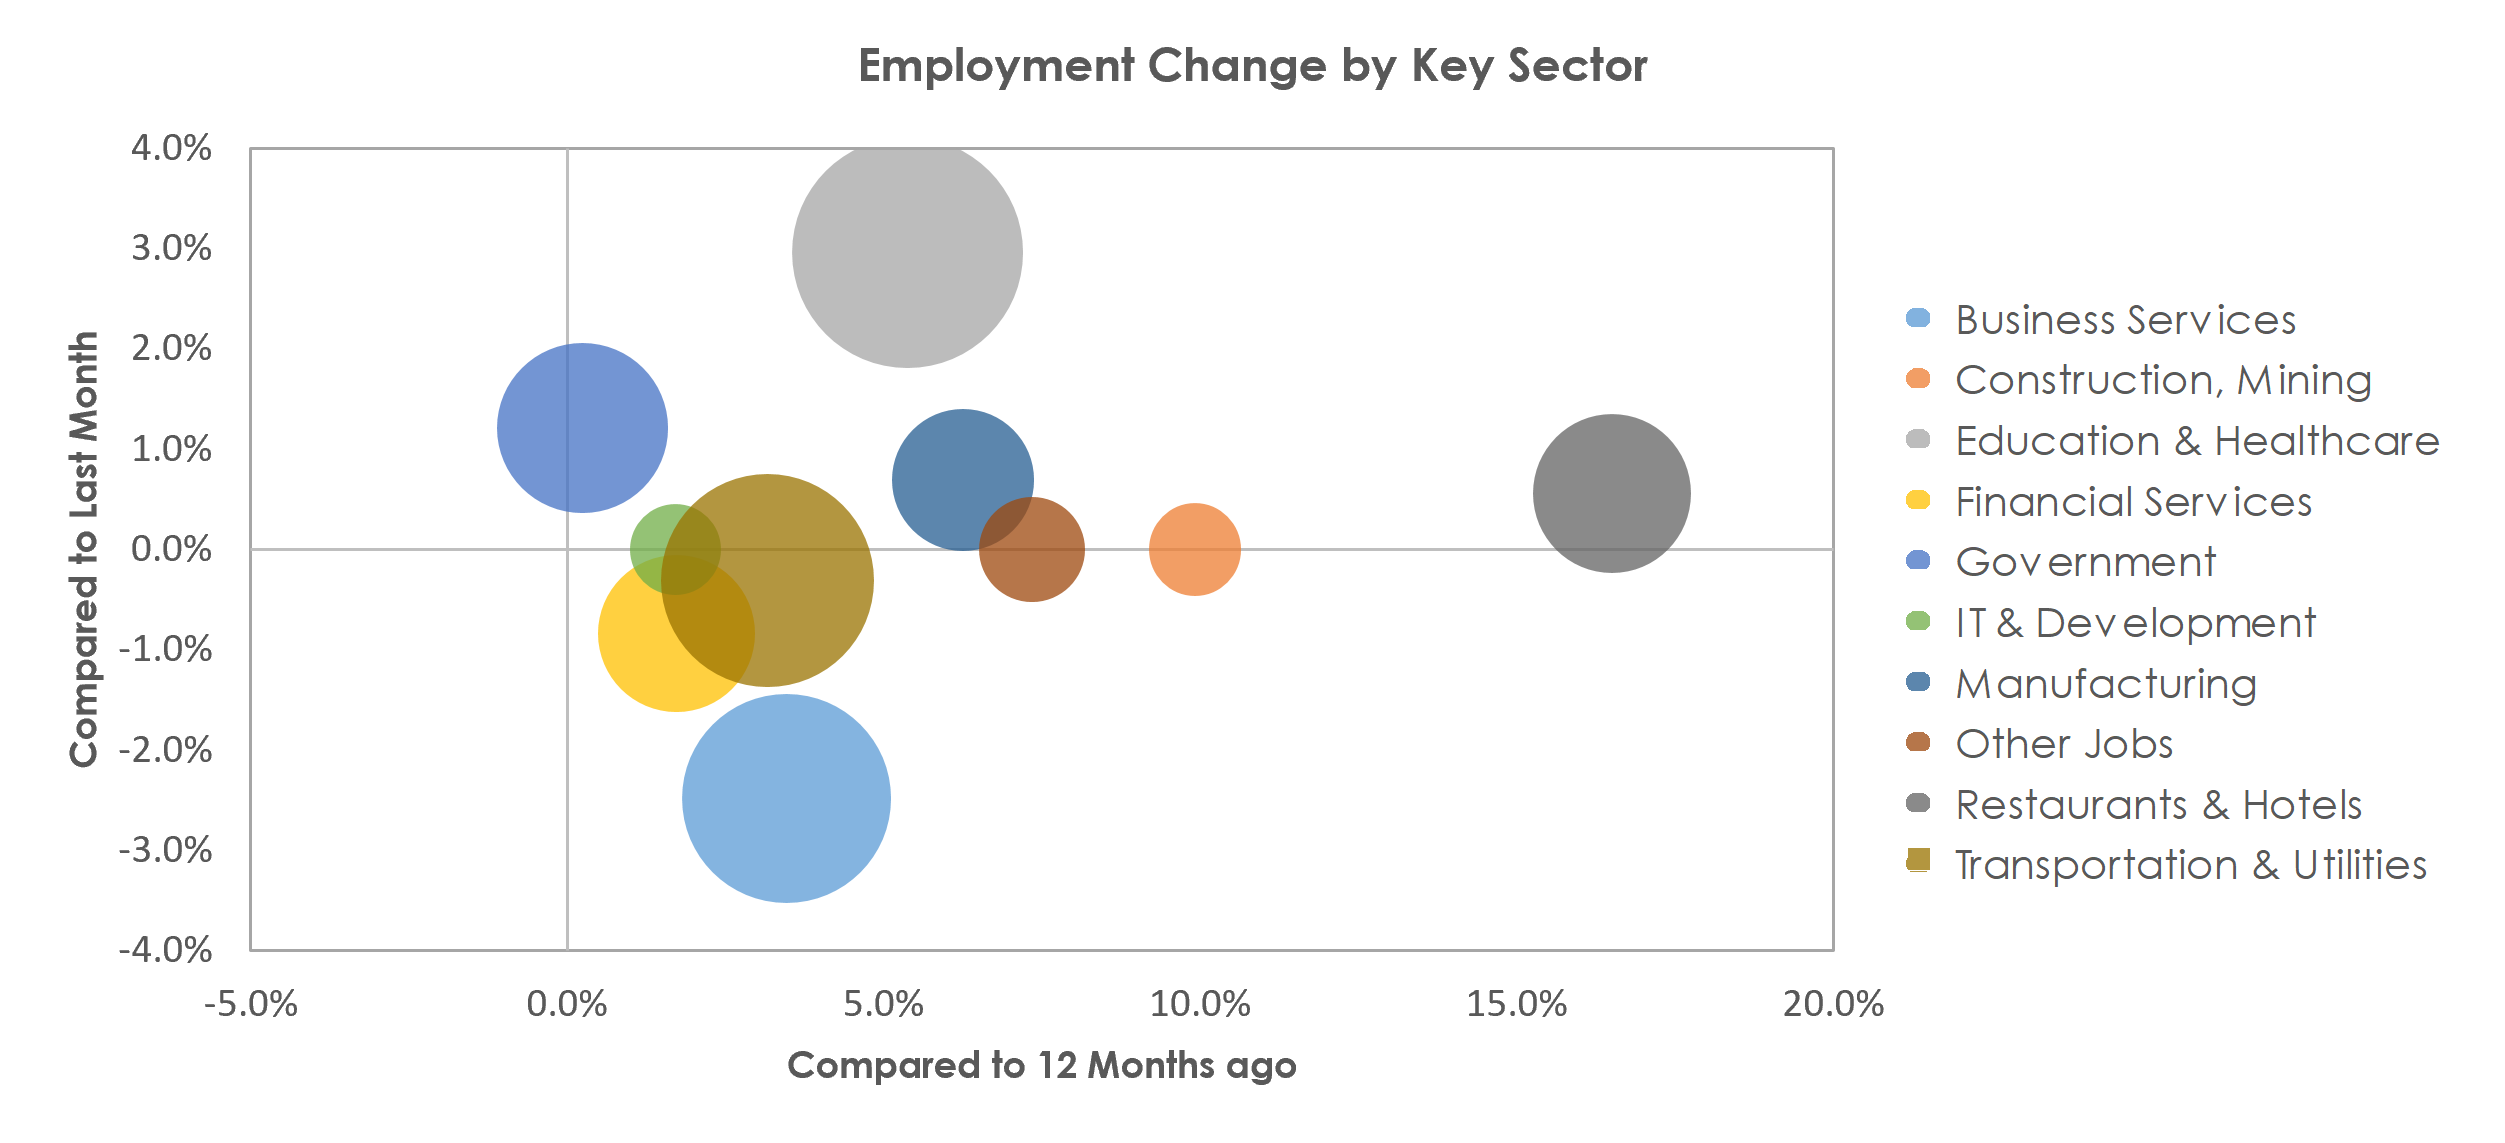 Bridgeport-Stamford-Norwalk, CT Unemployment by Industry February 2022